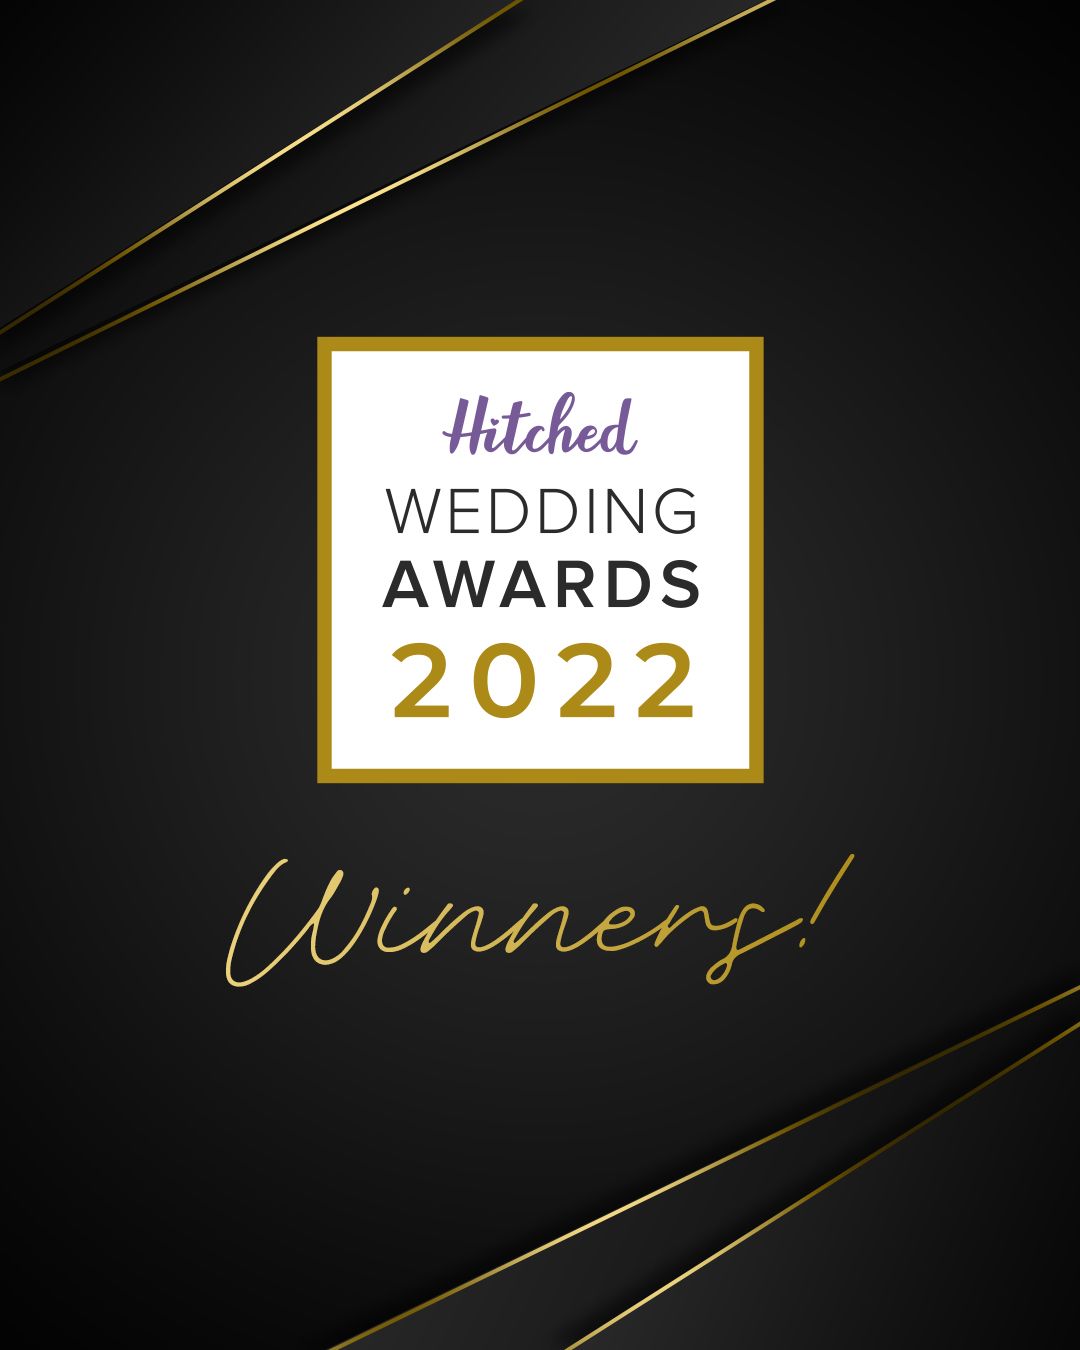 Hitched Wedding Awards 2022 - Small Hotel Wedding Venue